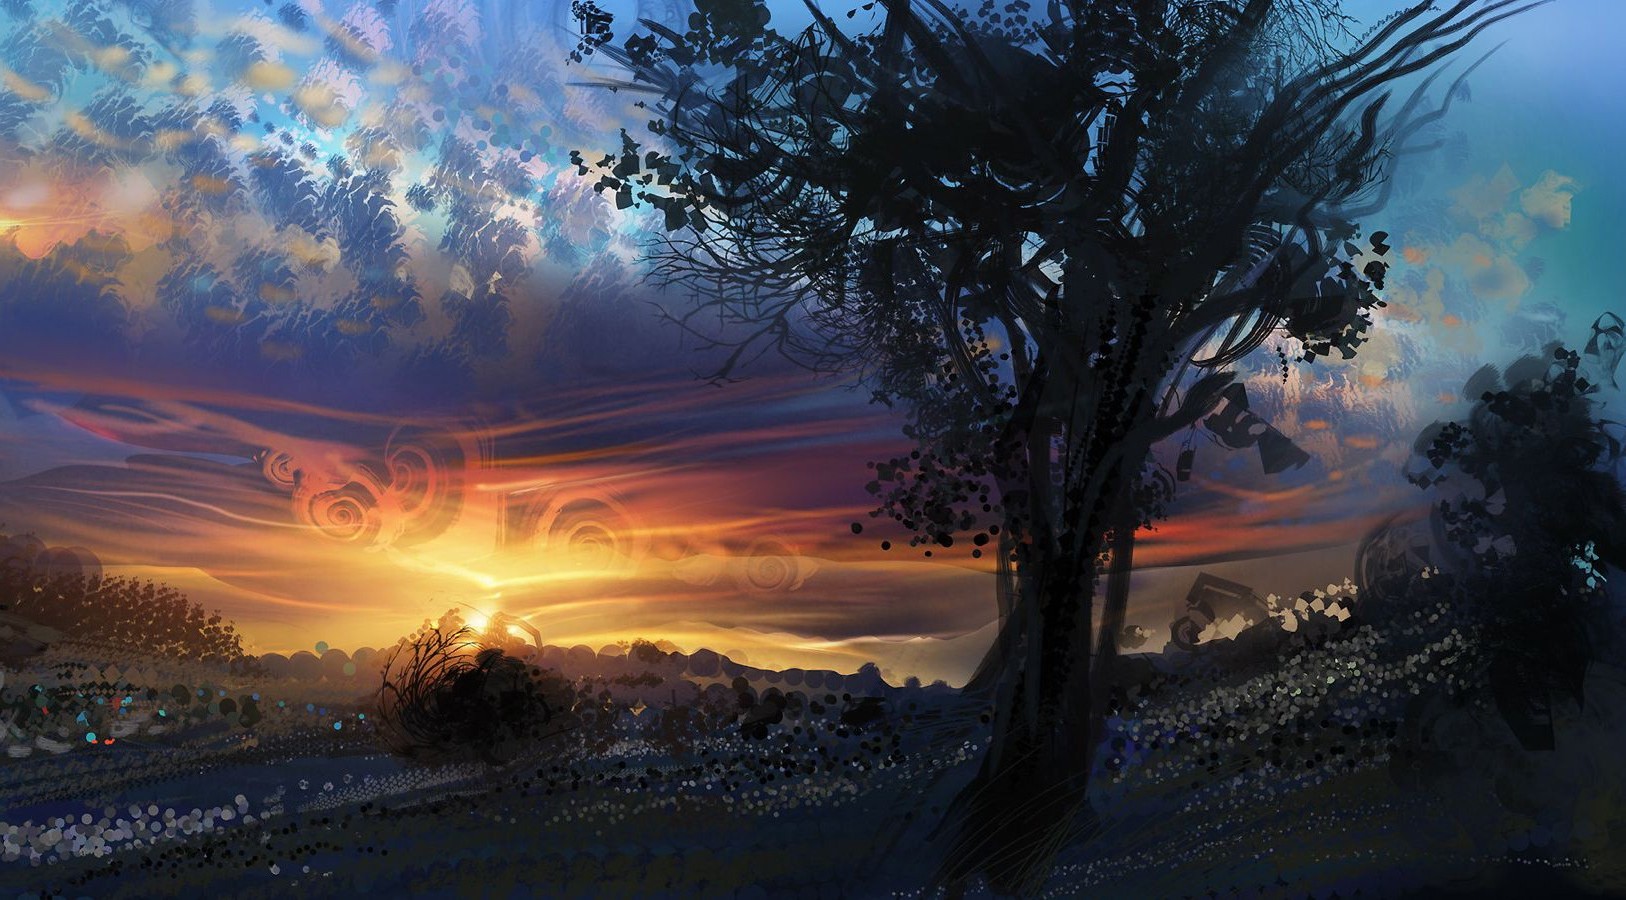 digital Art, Painting, Trees, Clouds, Sunset, Artwork, Nature, Field